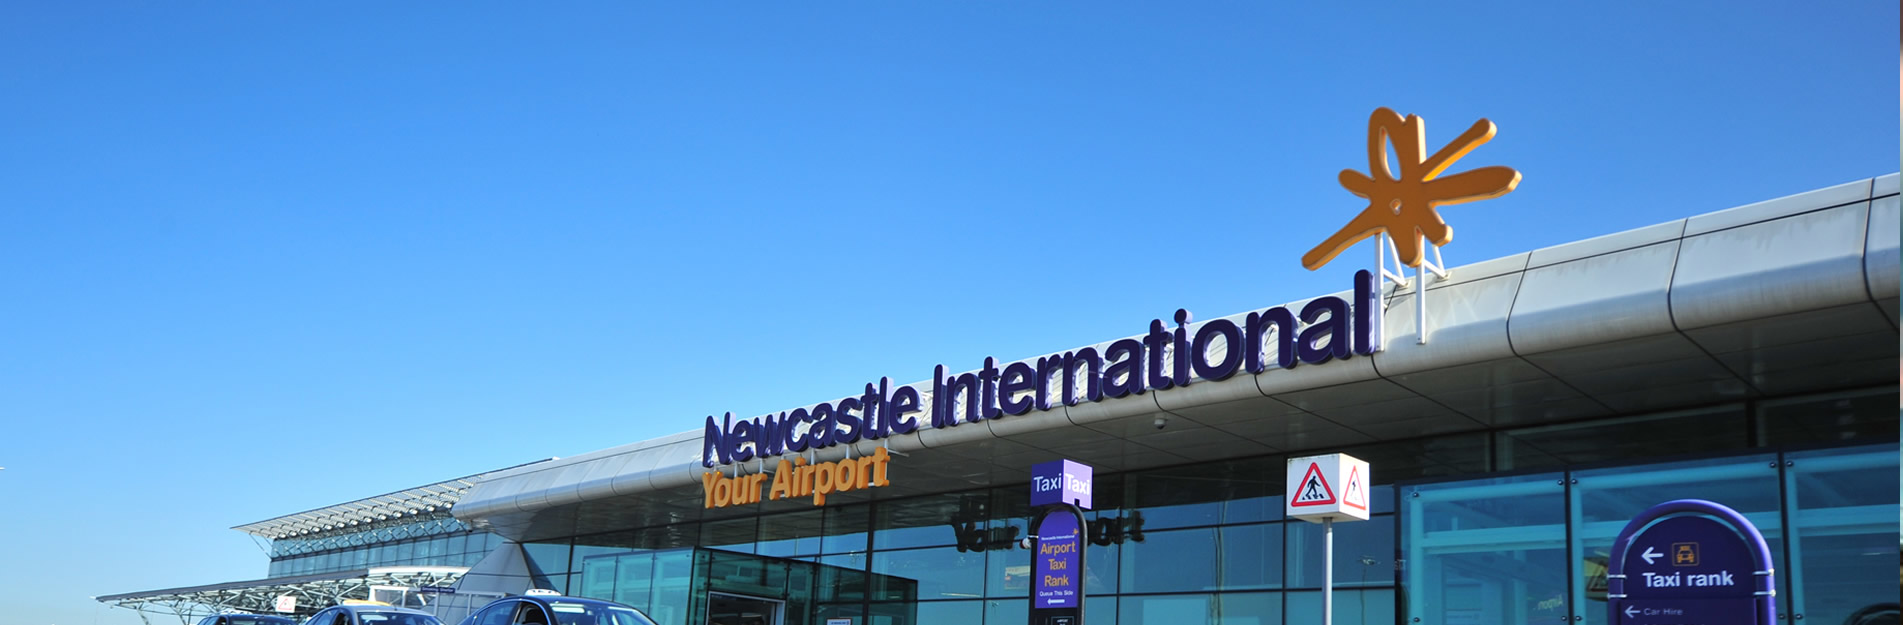 Newcastle International voted ‘Star UK Airport’